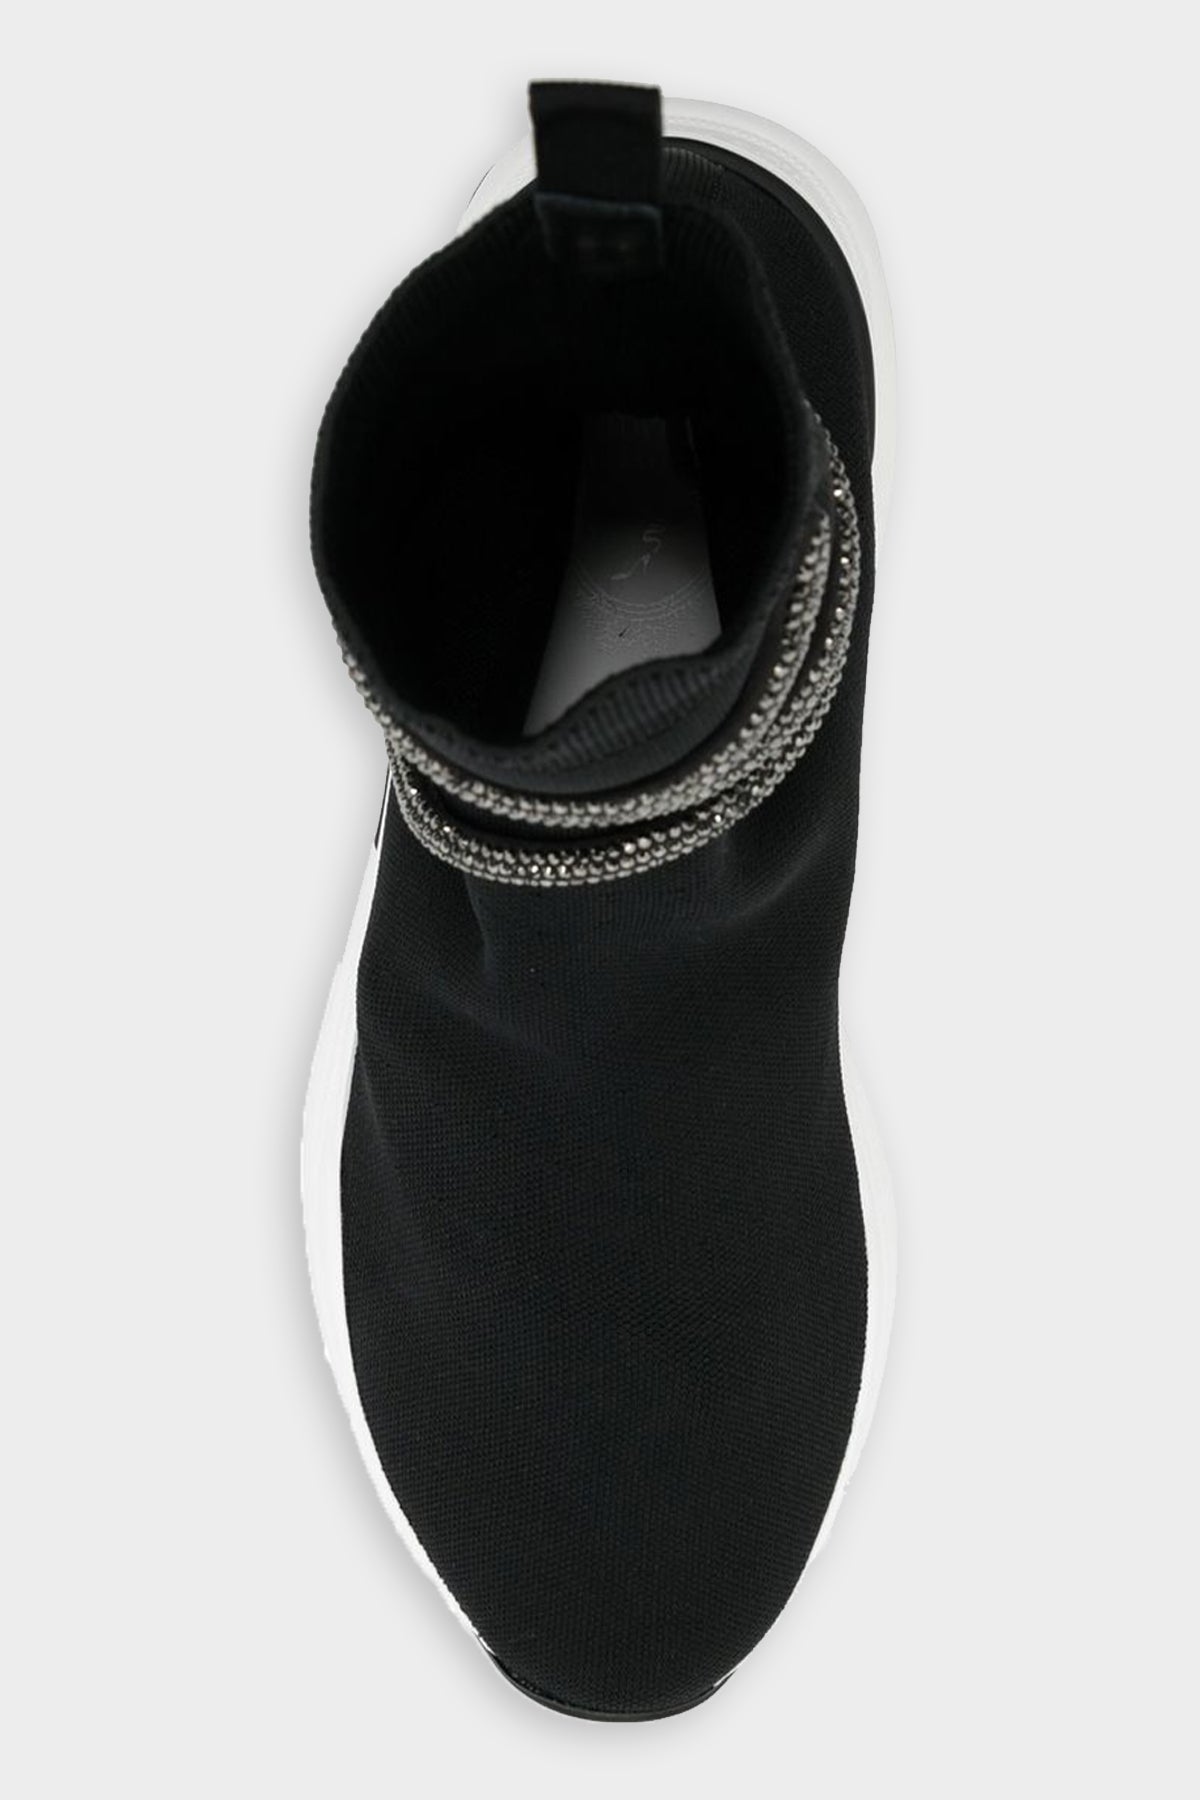 Cleo Crystal Wrap Sock Sneakers in Black - shop-olivia.com